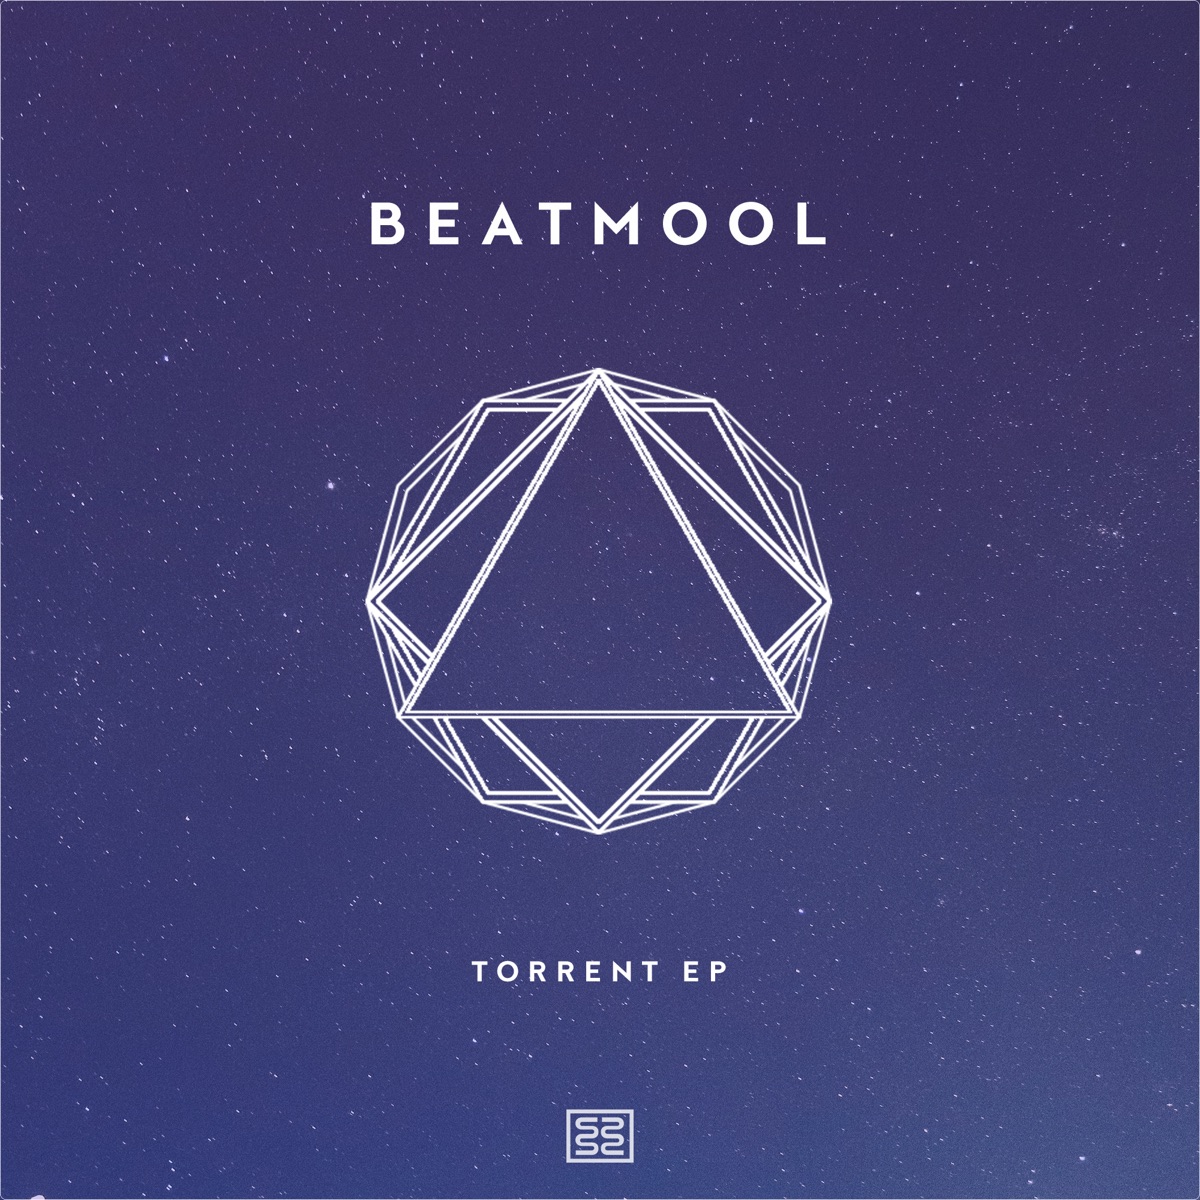 Torrent Ep - Album by Beatmool - Apple Music